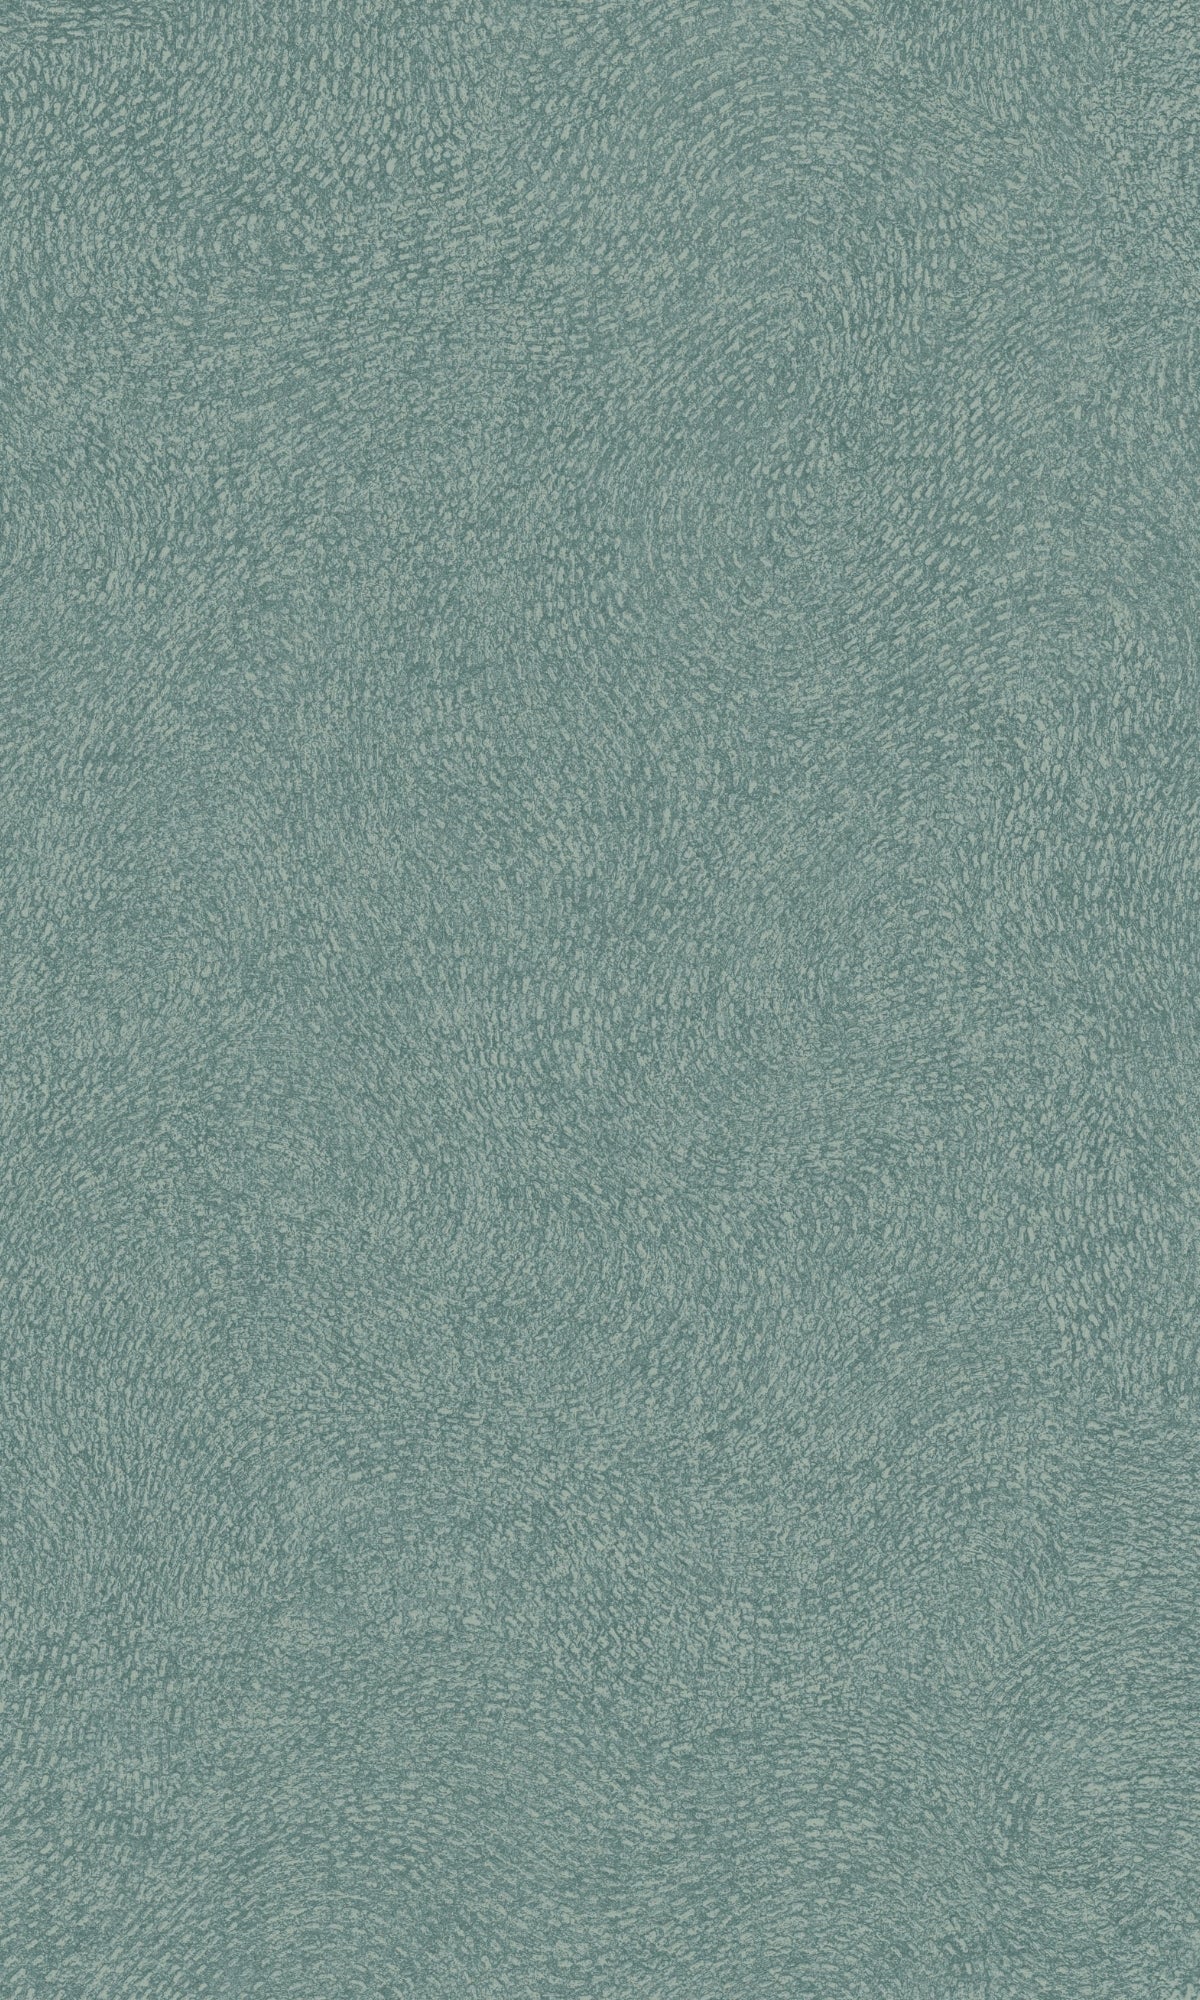 Green Abstract Textured Plain Wallpaper R9368